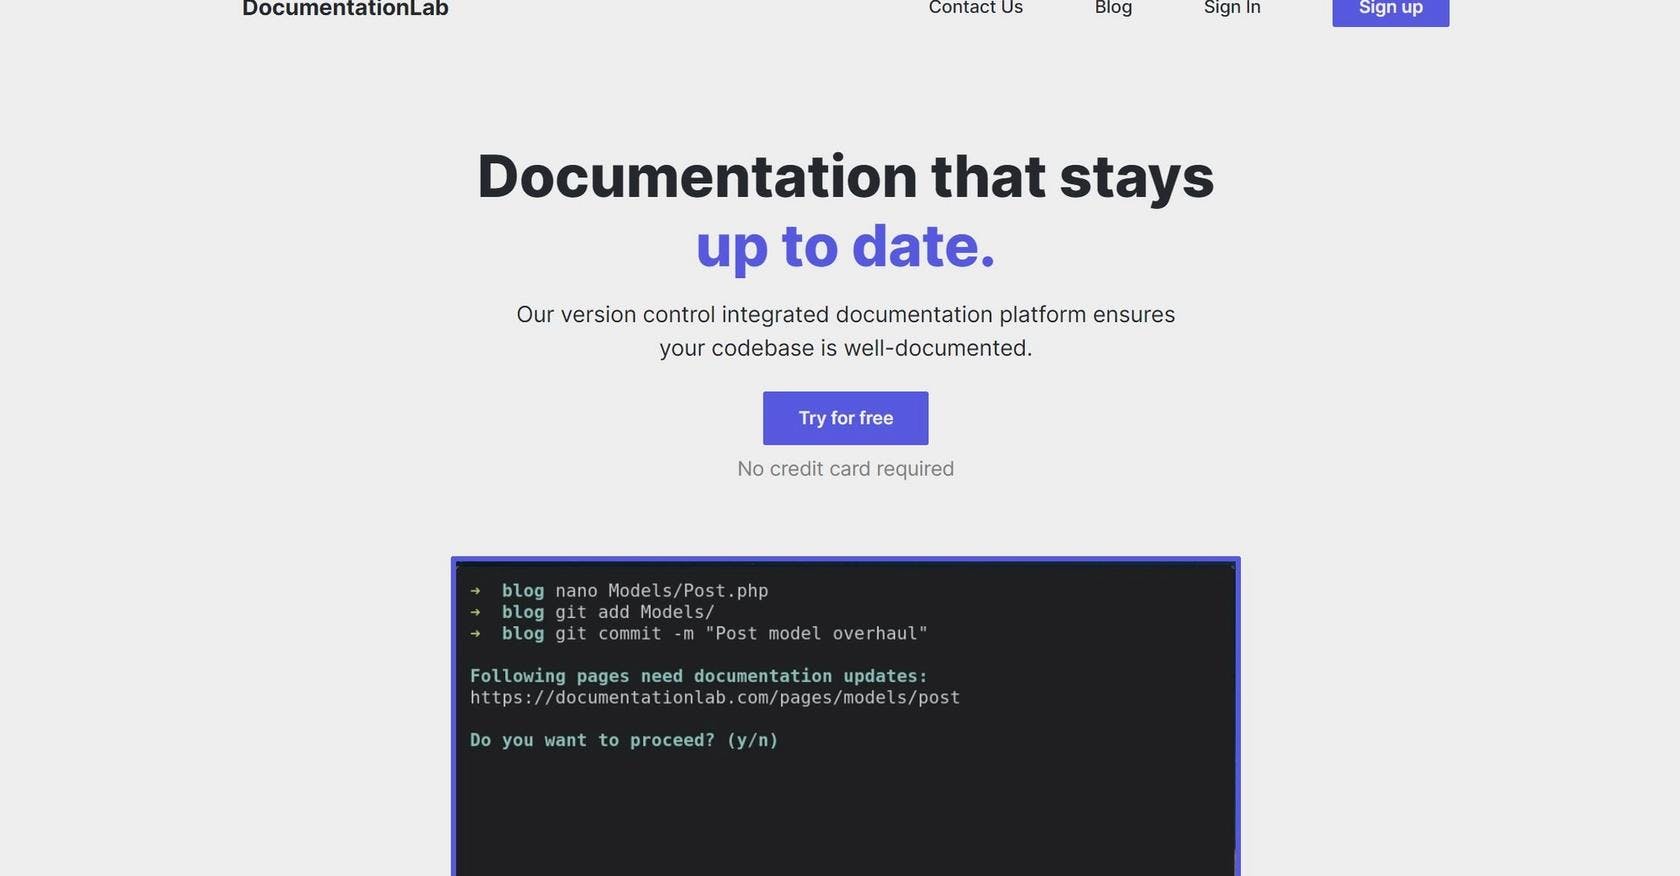 DocumentationLab